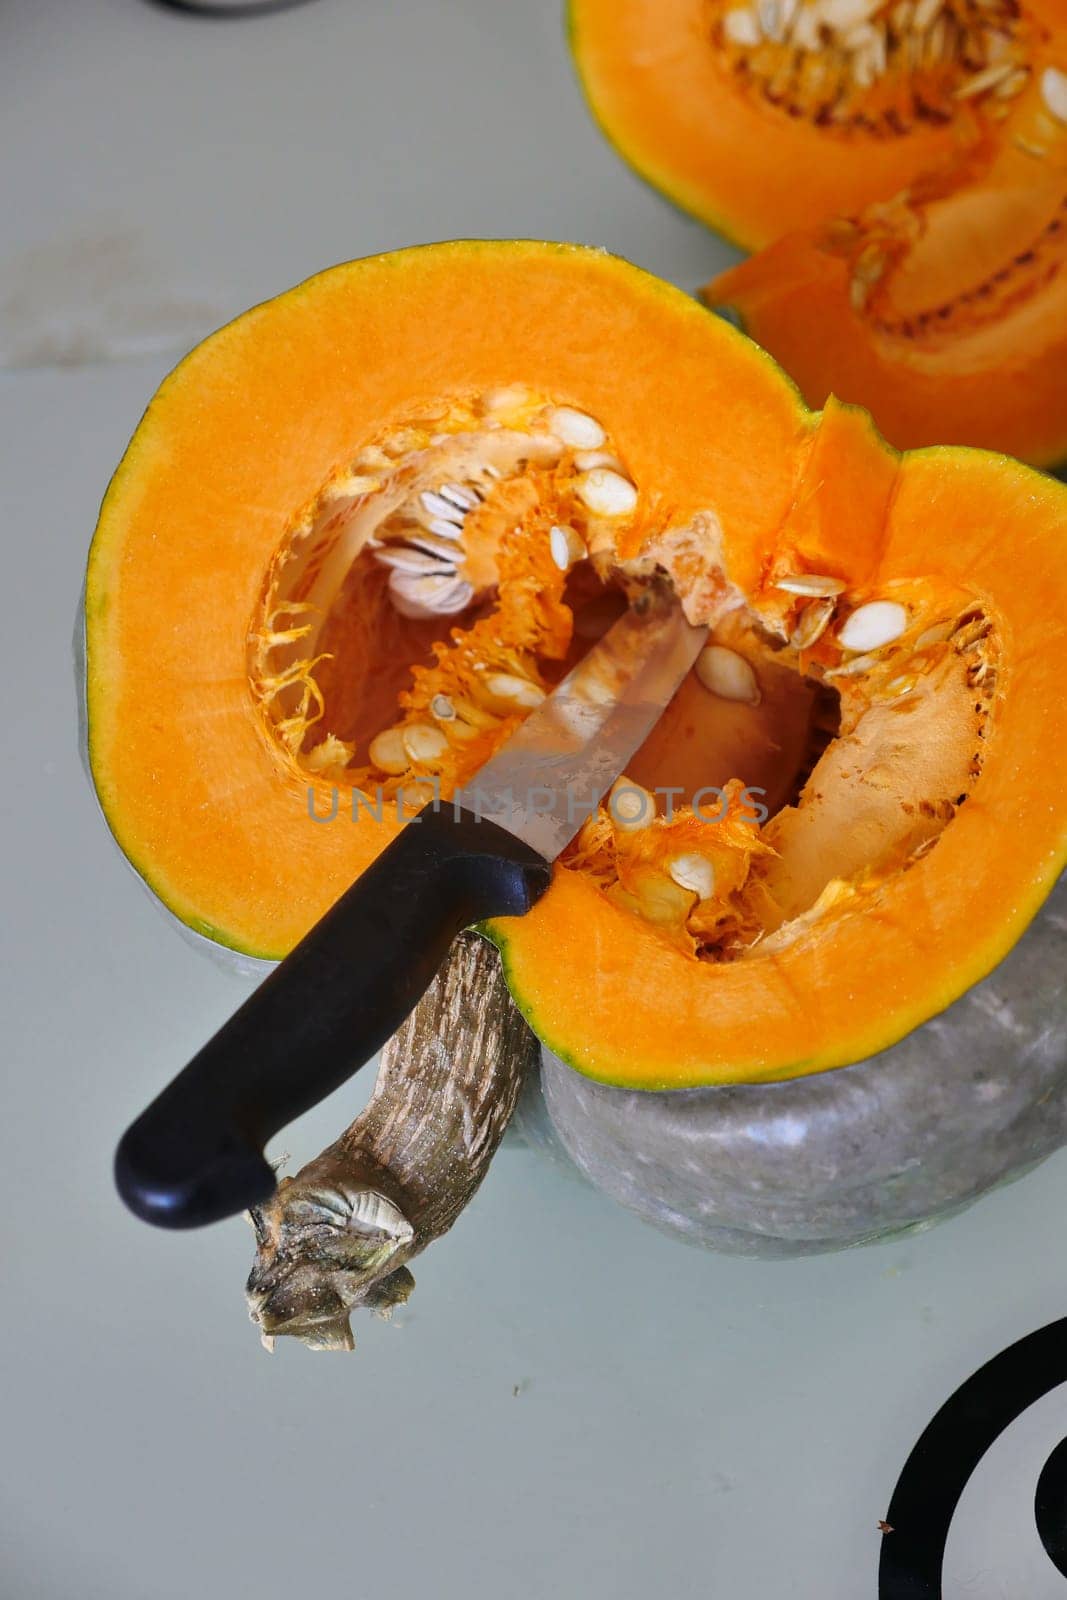 The benefits of fresh orange-colored pumpkin, human health and the benefits of pumpkin, by nhatipoglu